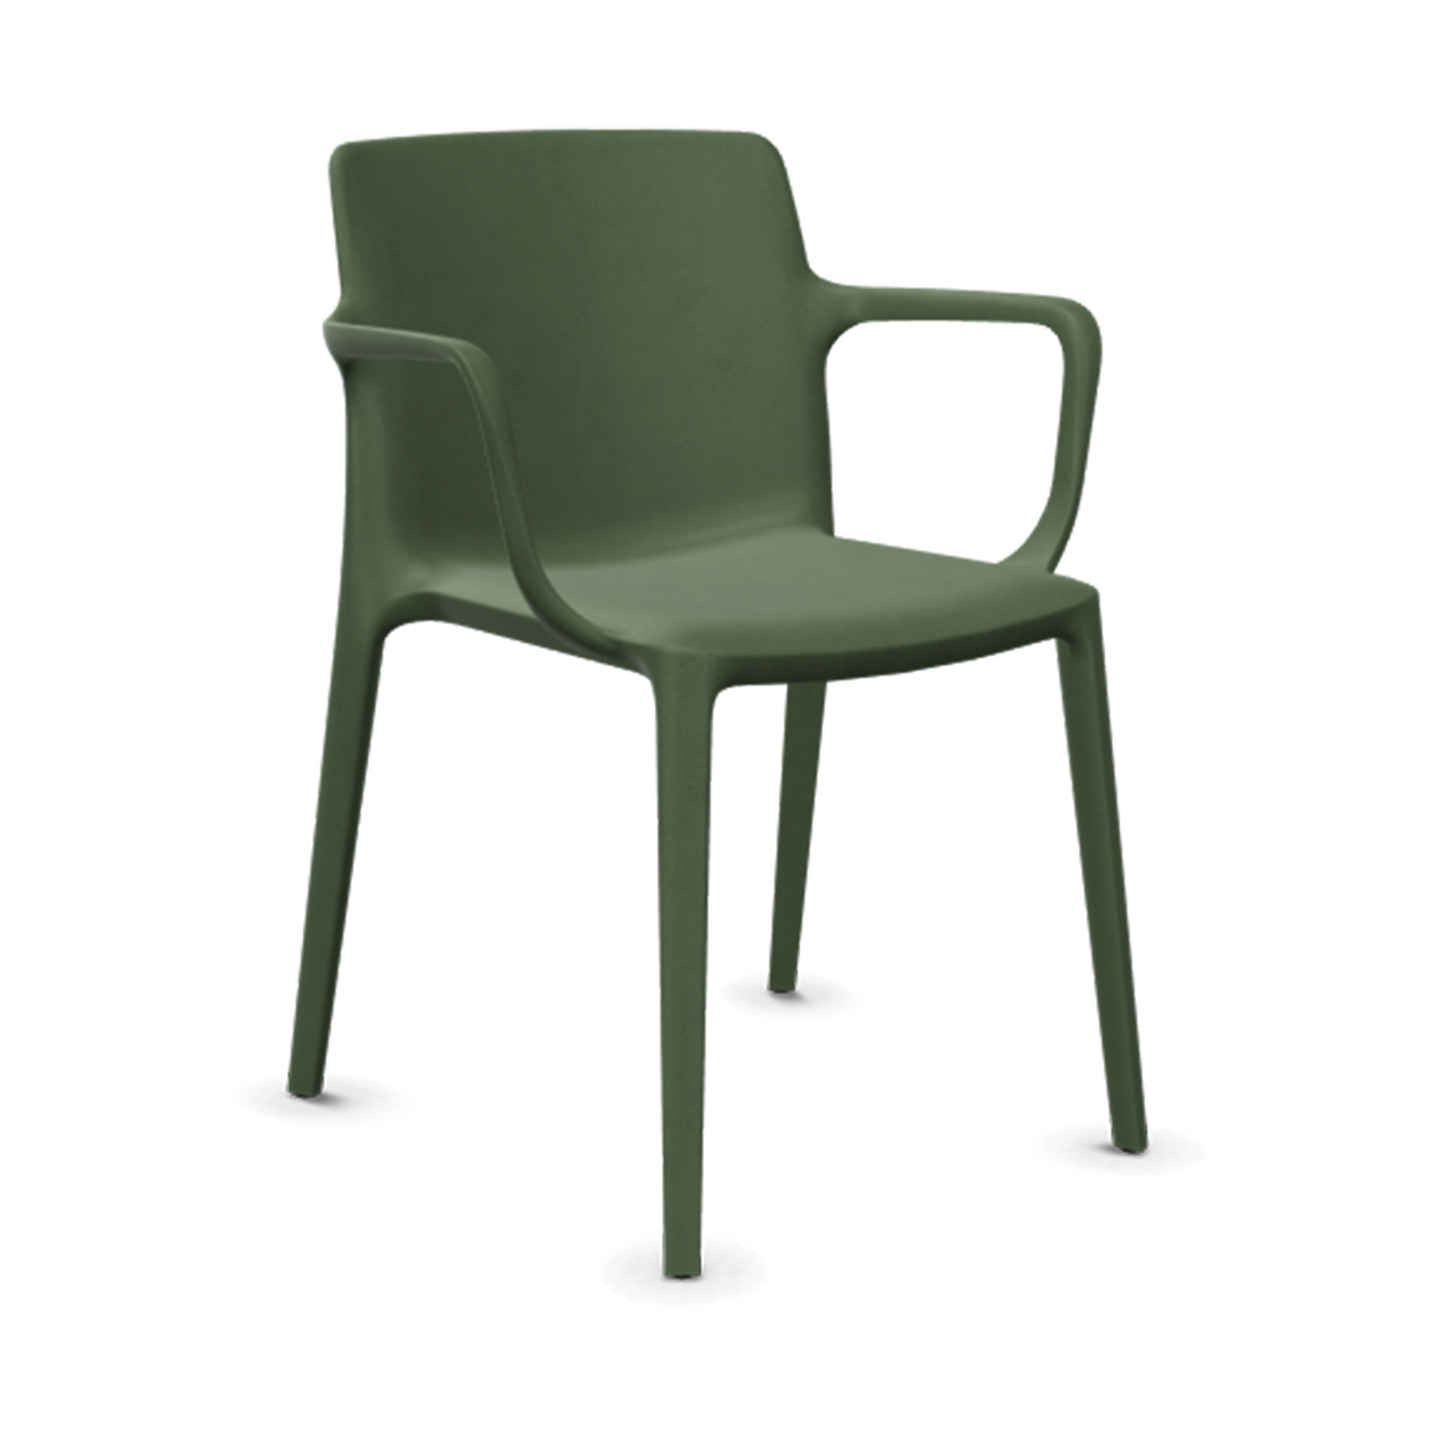 Actiu Fluit Chair with Arms - Green ACTFL16001044P18